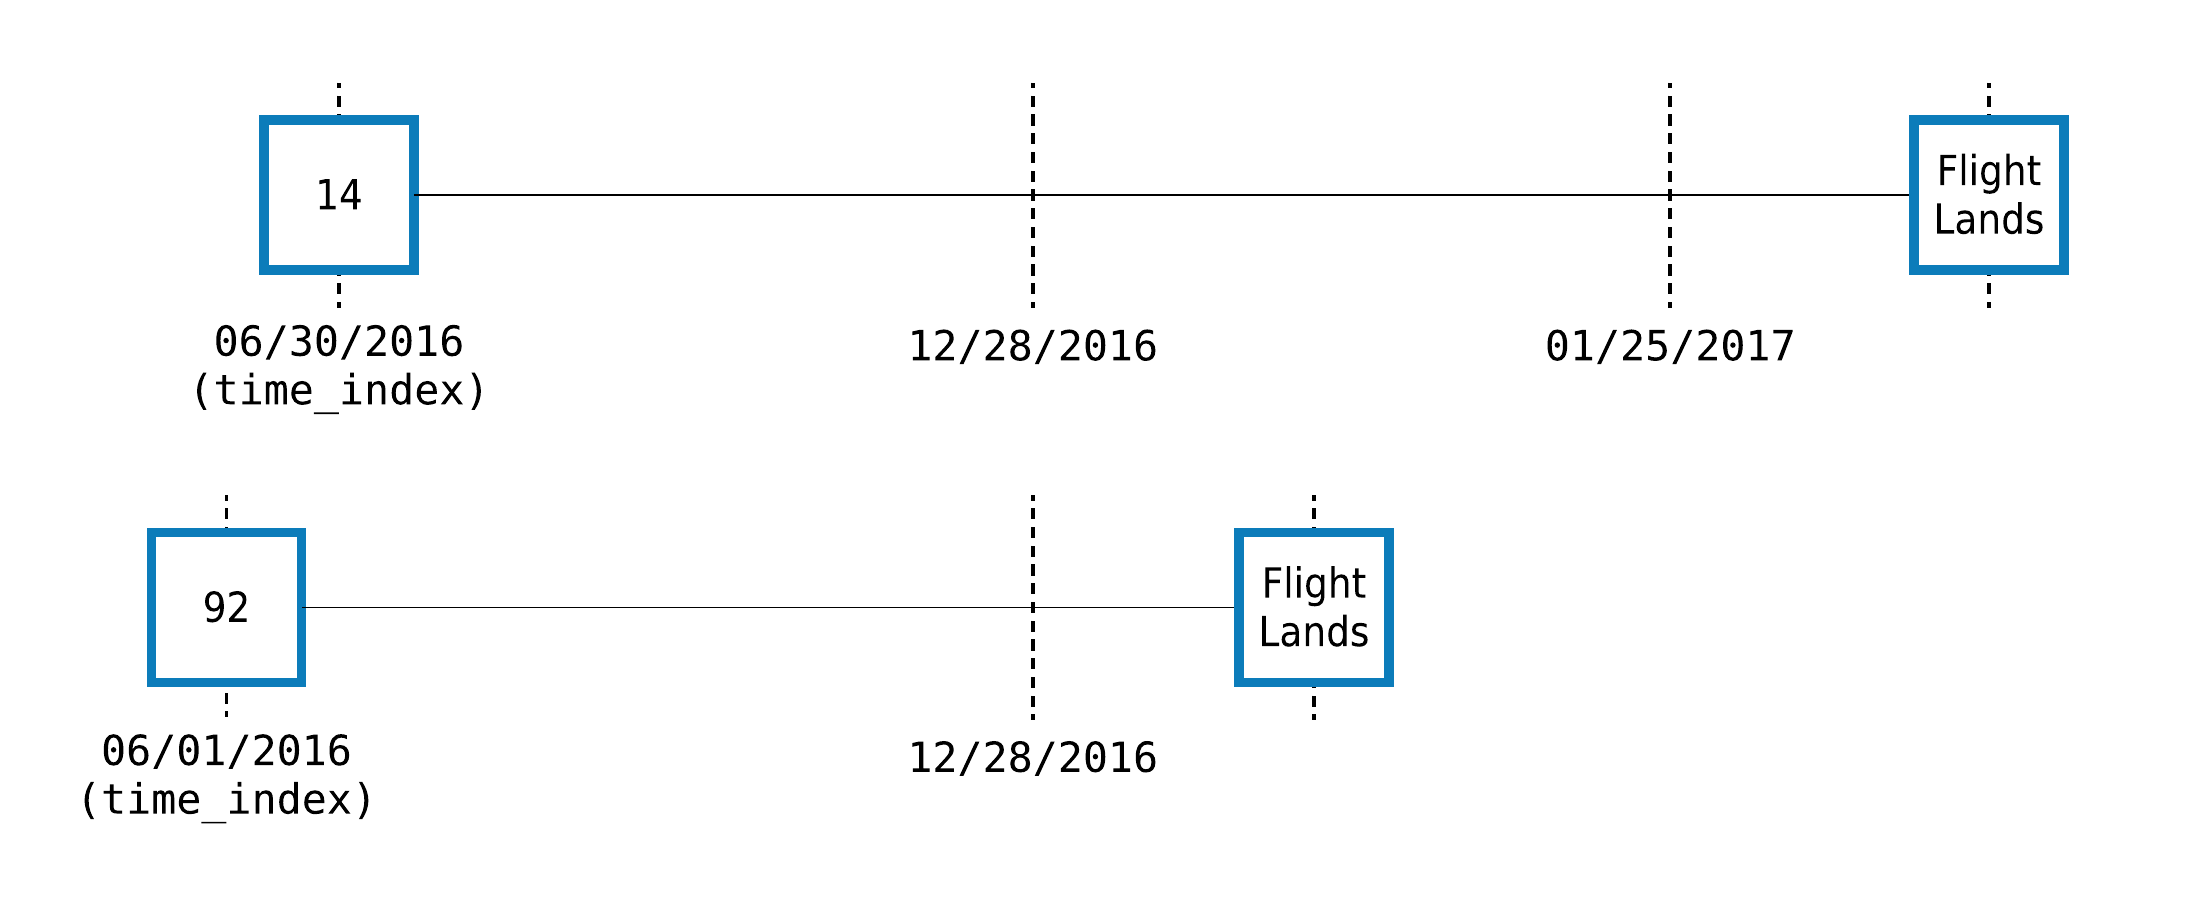 flight cutoff time diagram